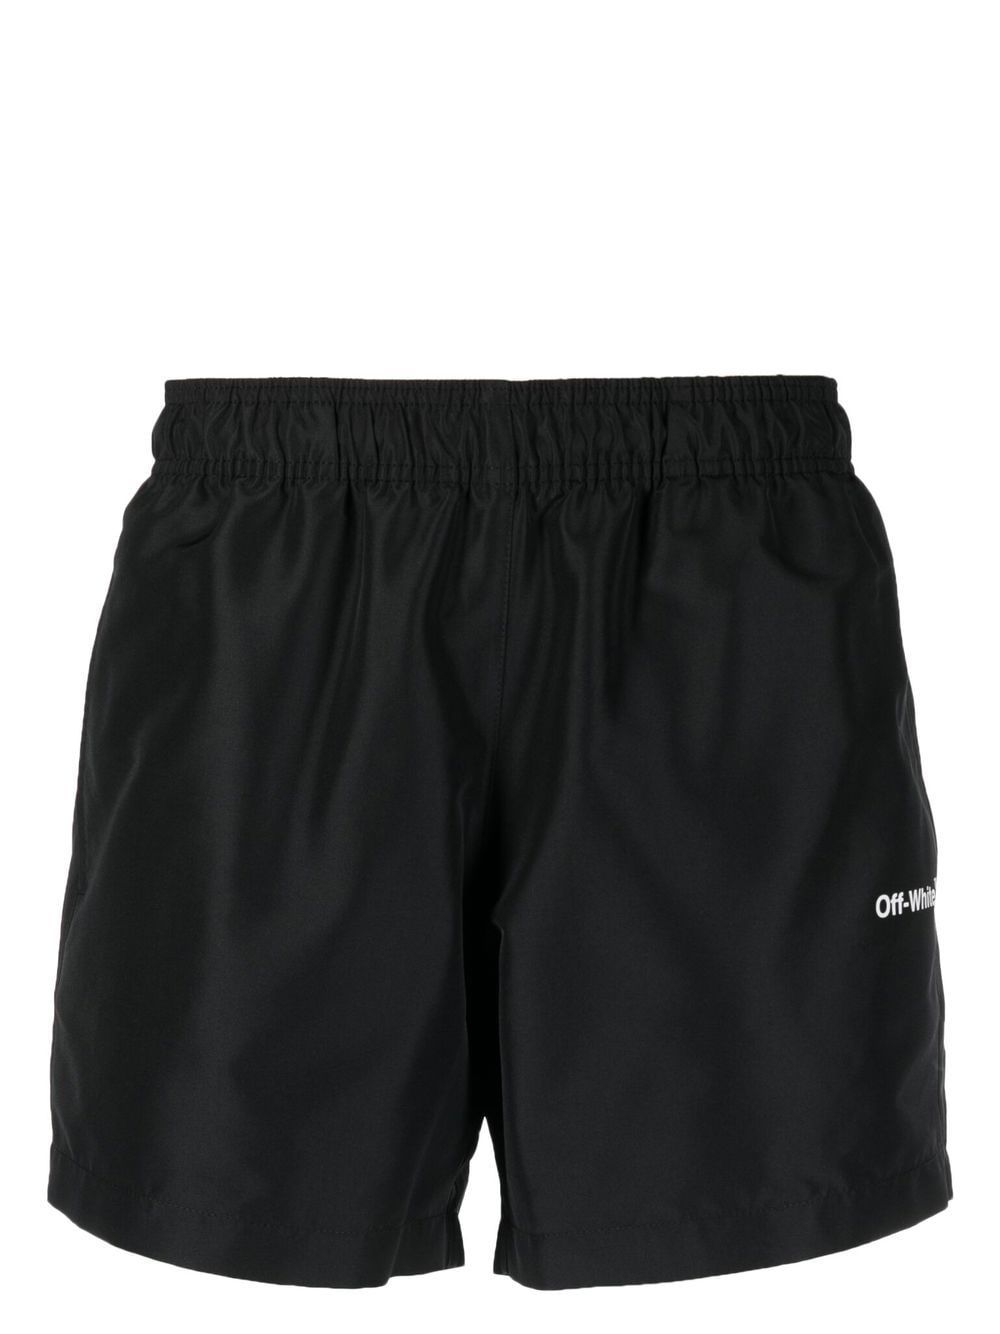 Off-white Arrows Print Swim Shorts In Black